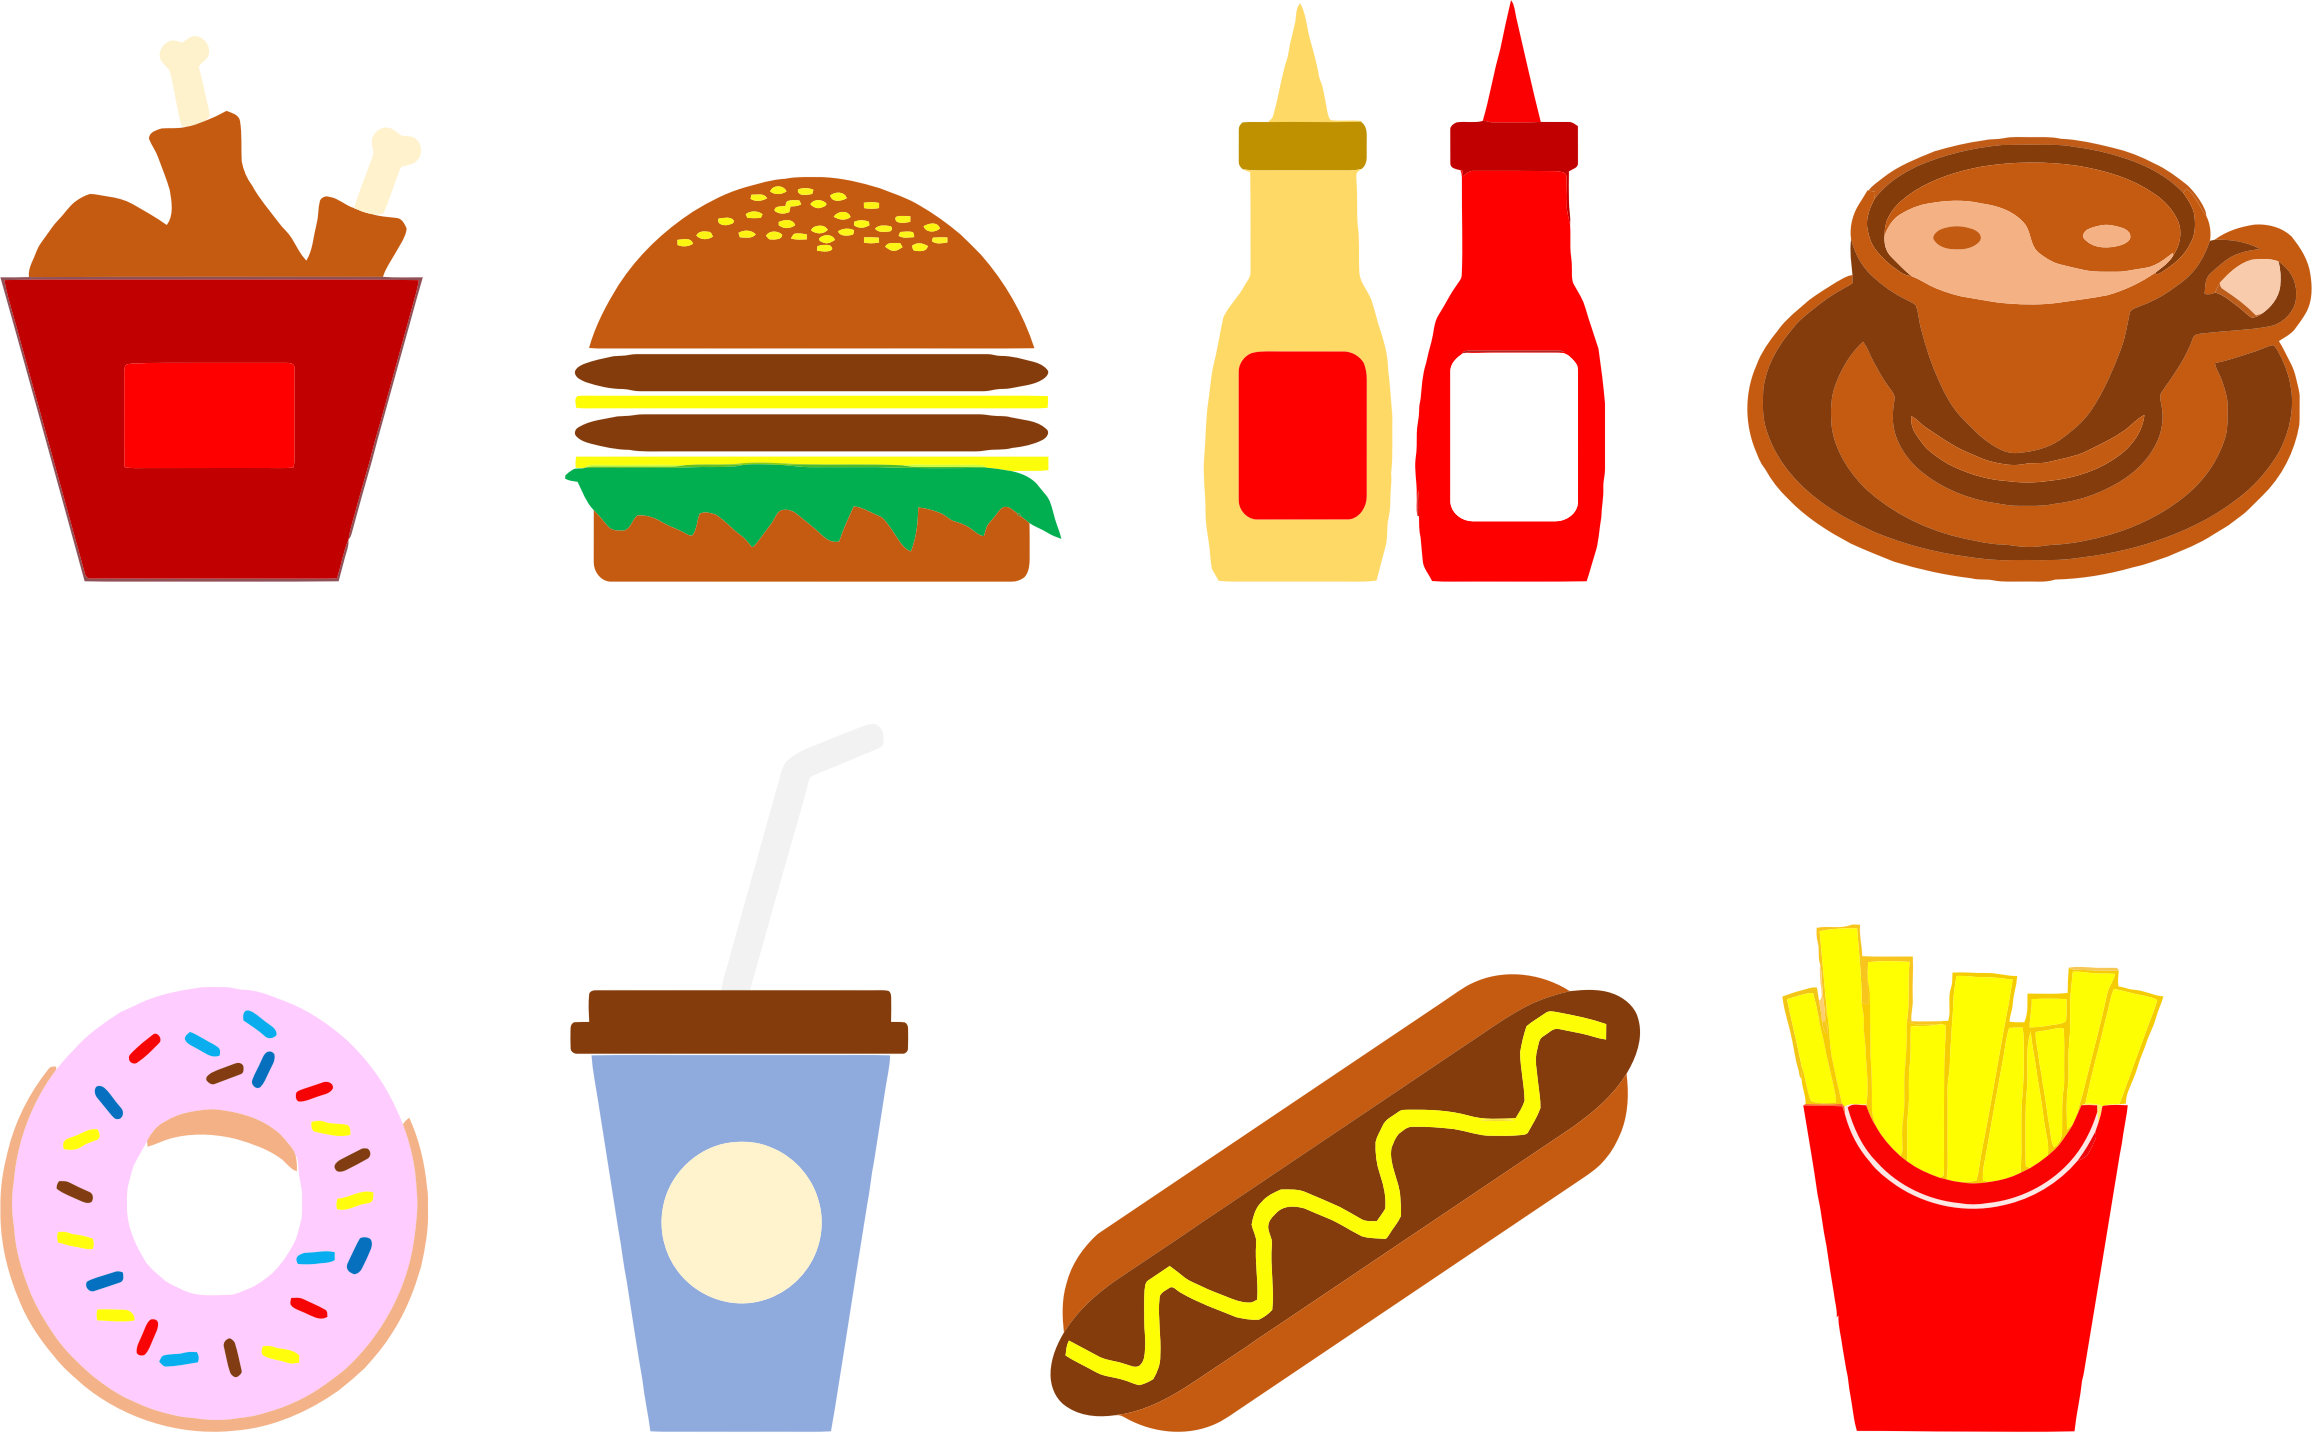 Food Icons - Hot Dog Costume Shirt Sausage Wiener Mustard Bun Fast (2312x1433)